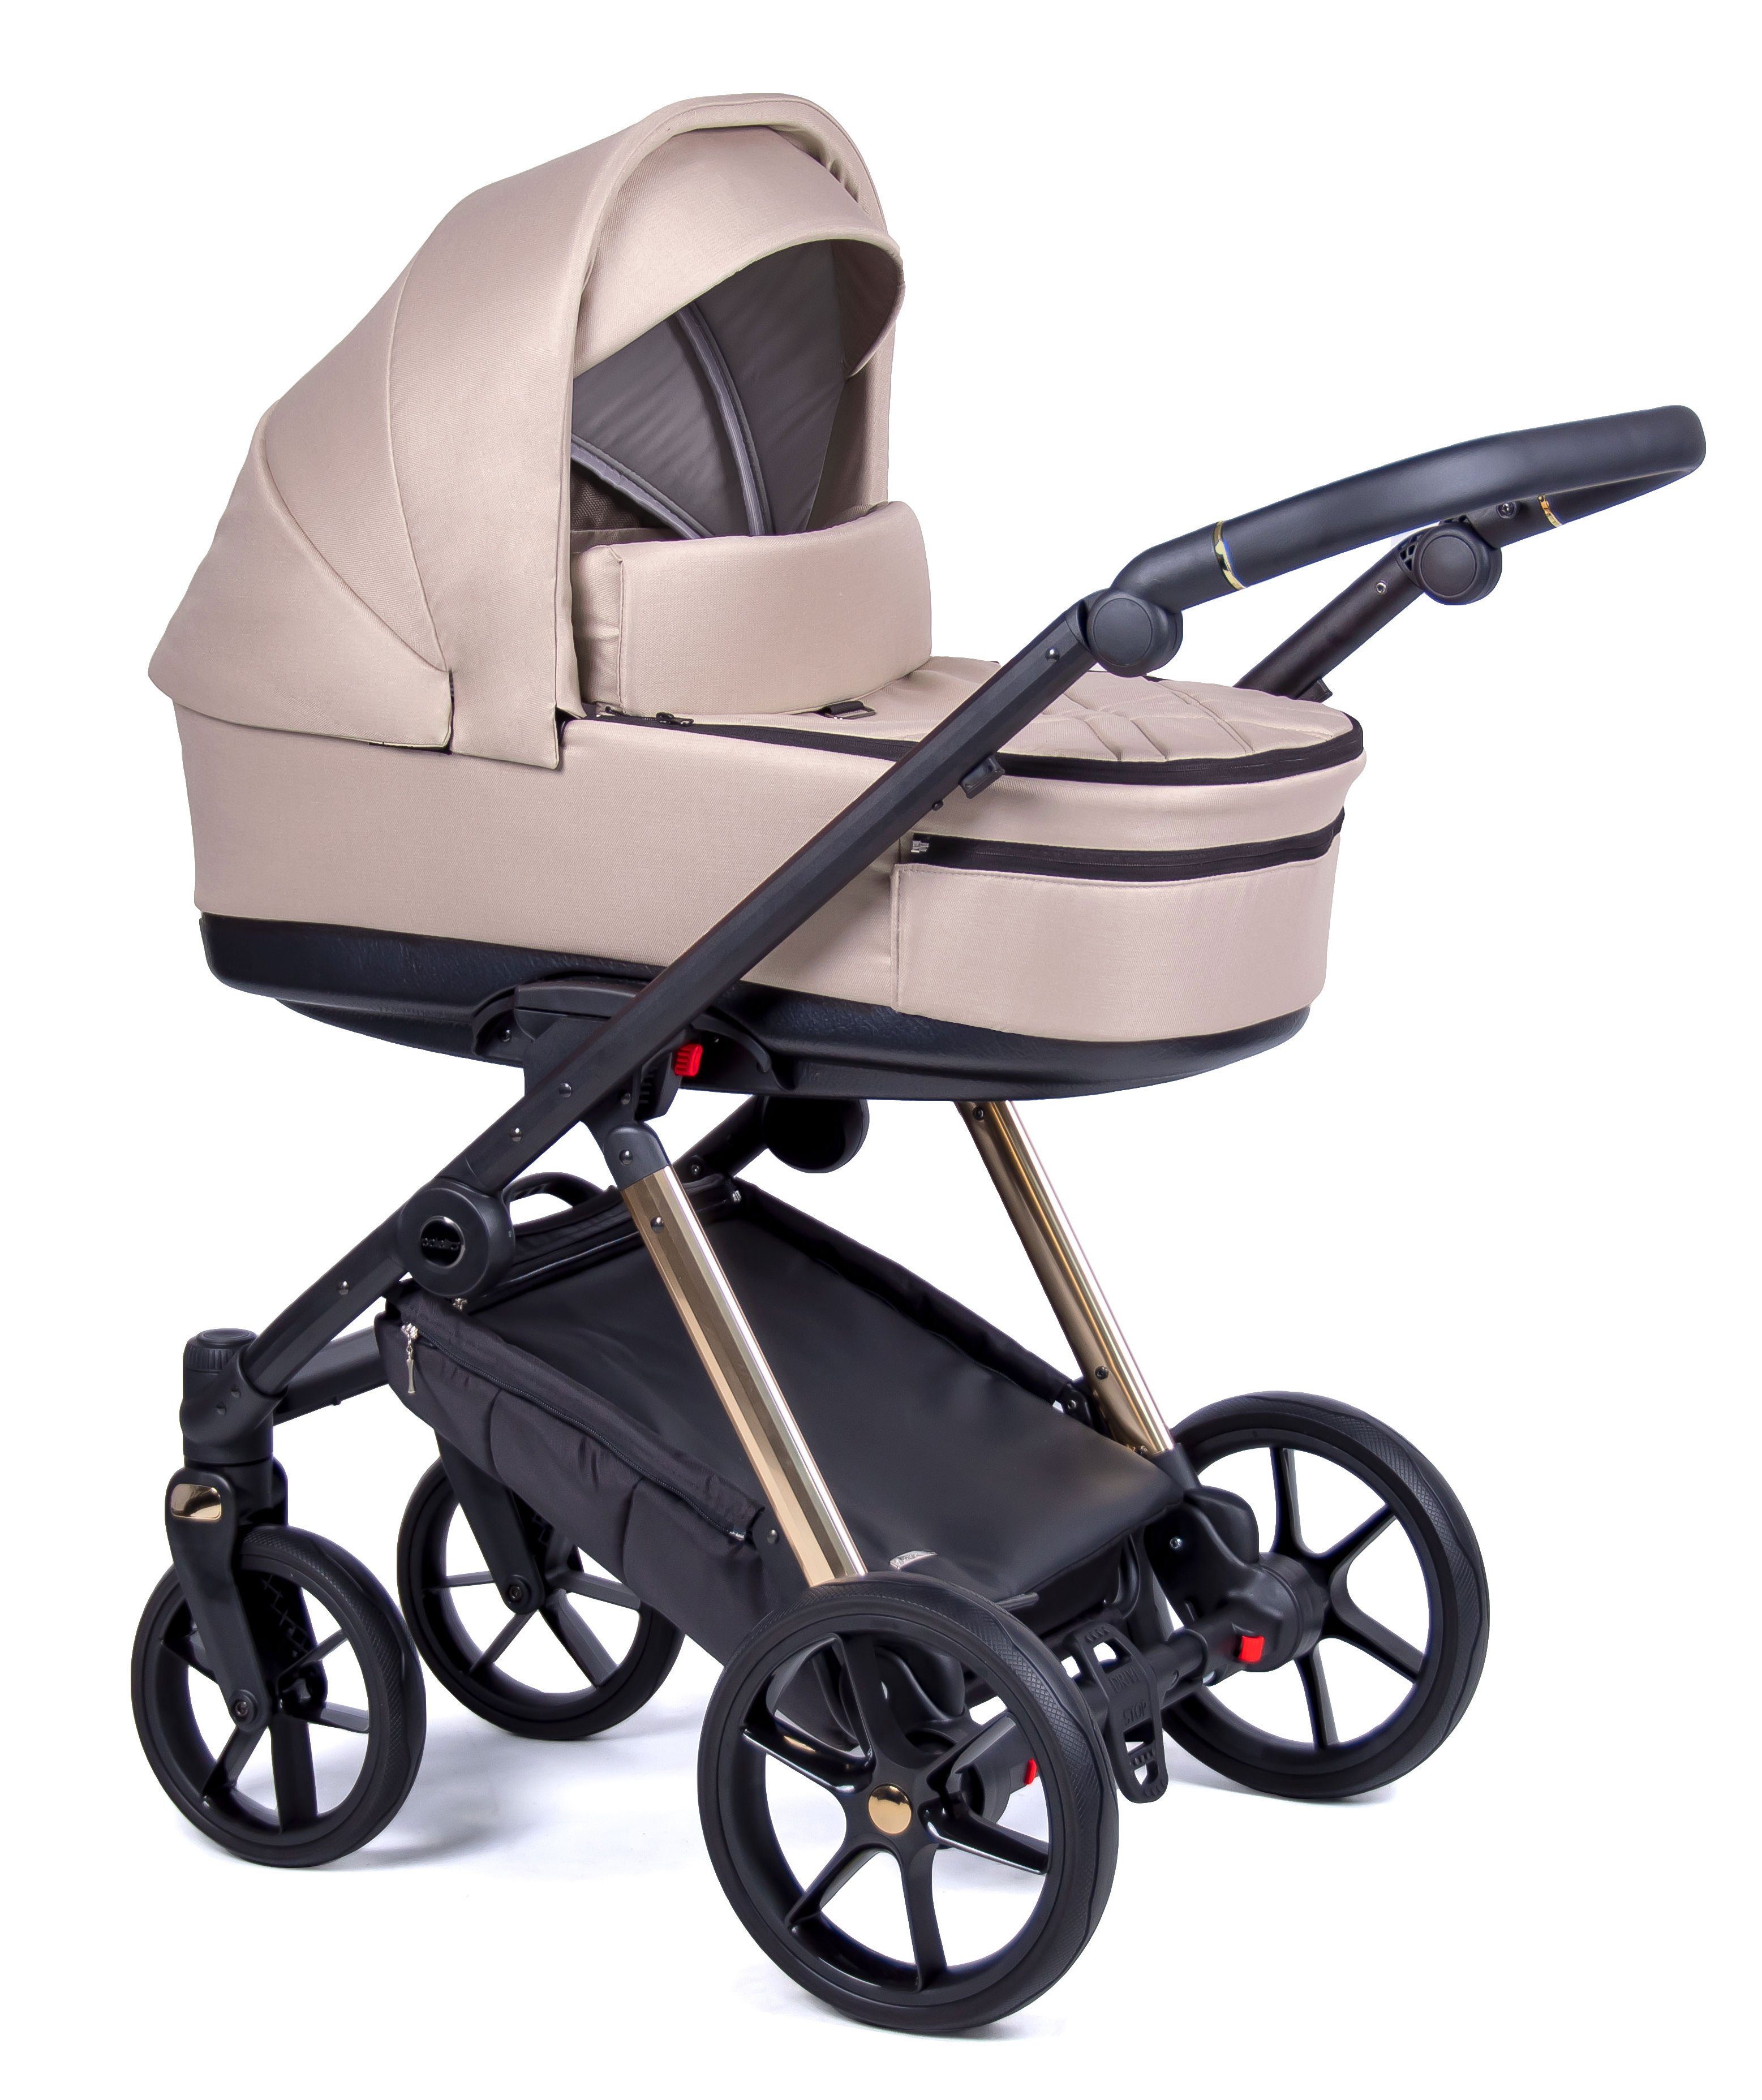 babies-on-wheels Kombi-Kinderwagen 3 in 1 Teile - 24 Kinderwagen-Set - Axxis Sand in Gestell gold Designs 15 =